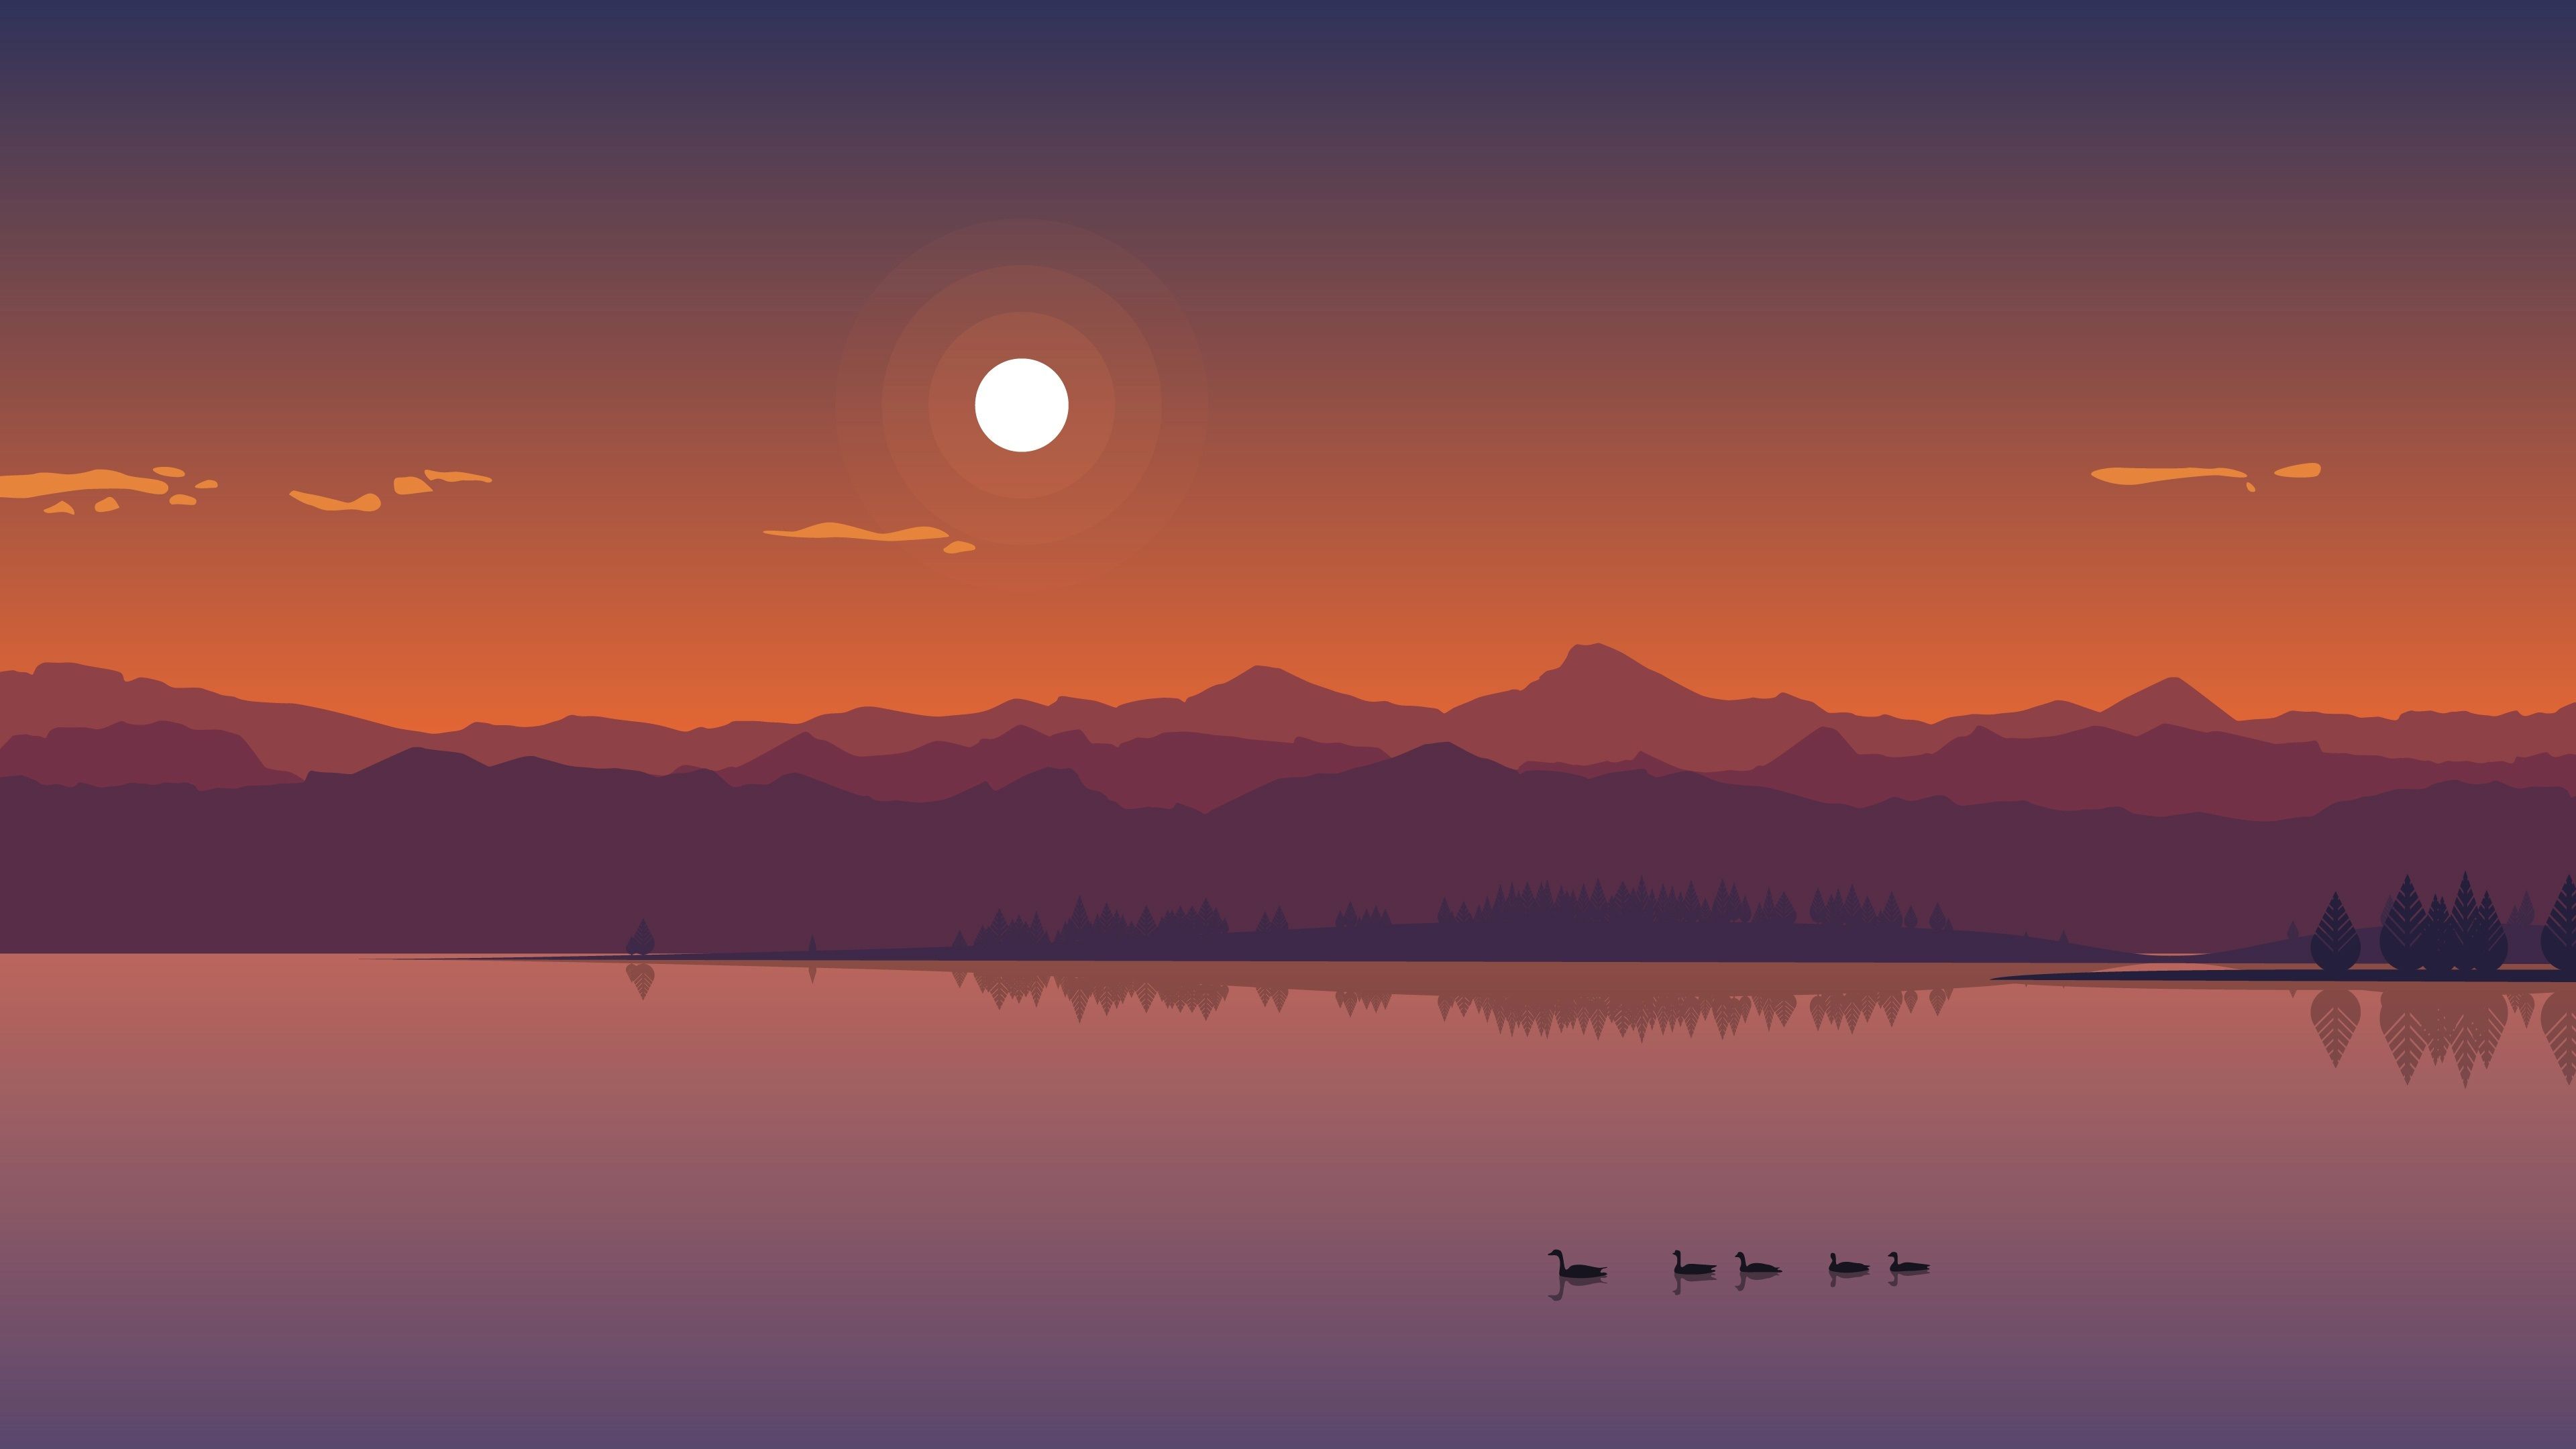 Wallpaper River, mountains, ducks, sun, dusk, vector art picture 3840x2160 UHD 4K Picture, Image